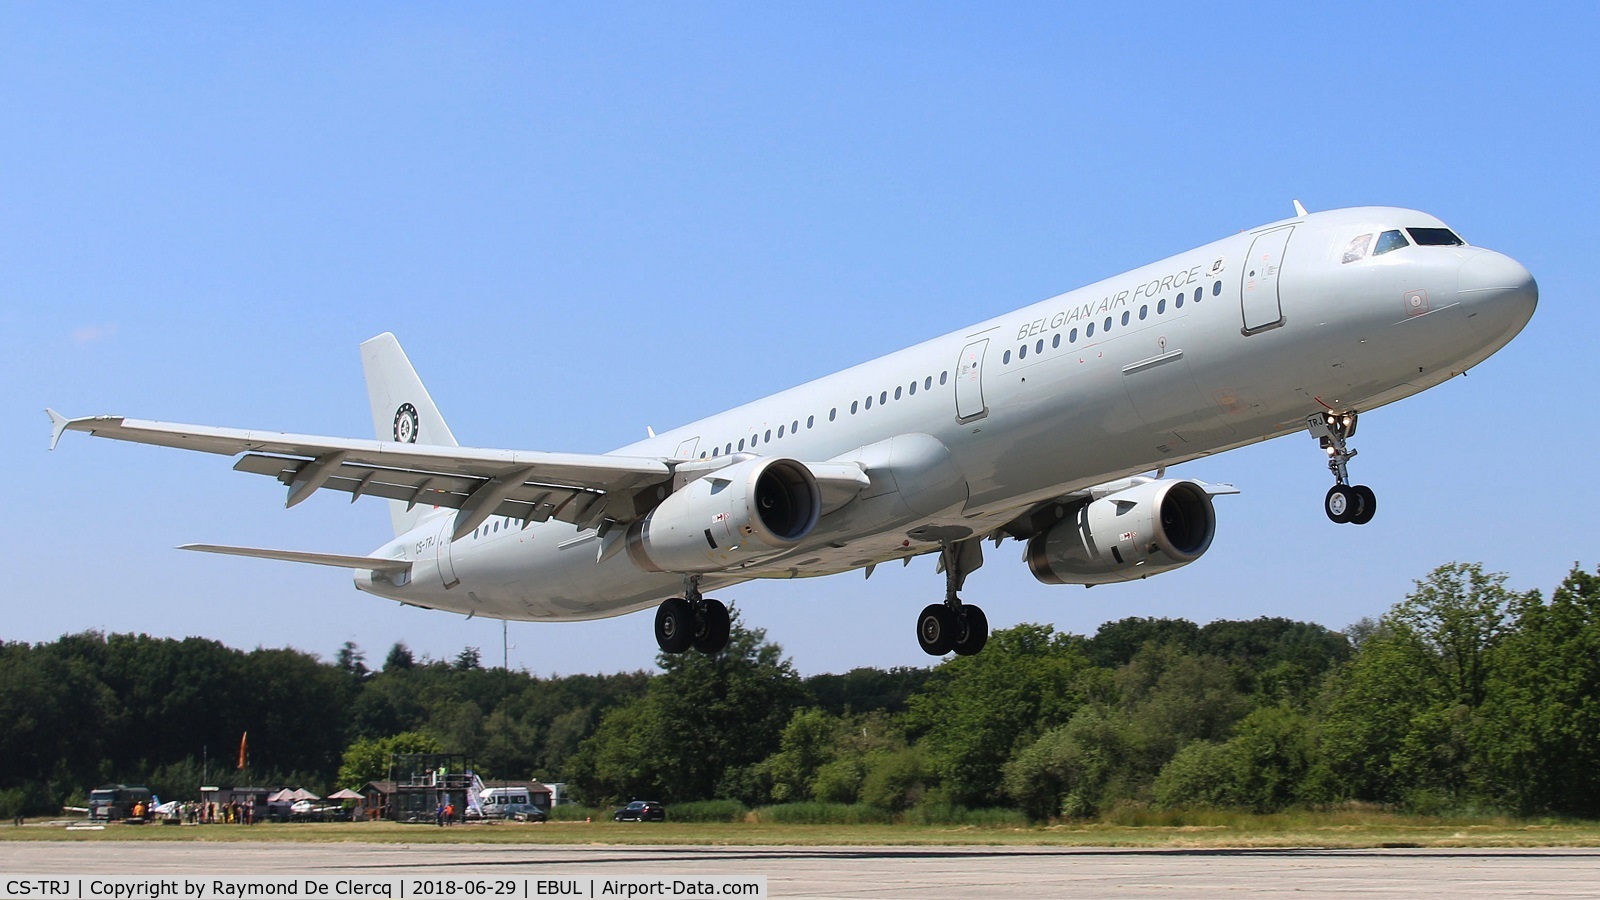 CS-TRJ, 1999 Airbus A321-231 C/N 1004, Landing at Ursel Avia 2018.